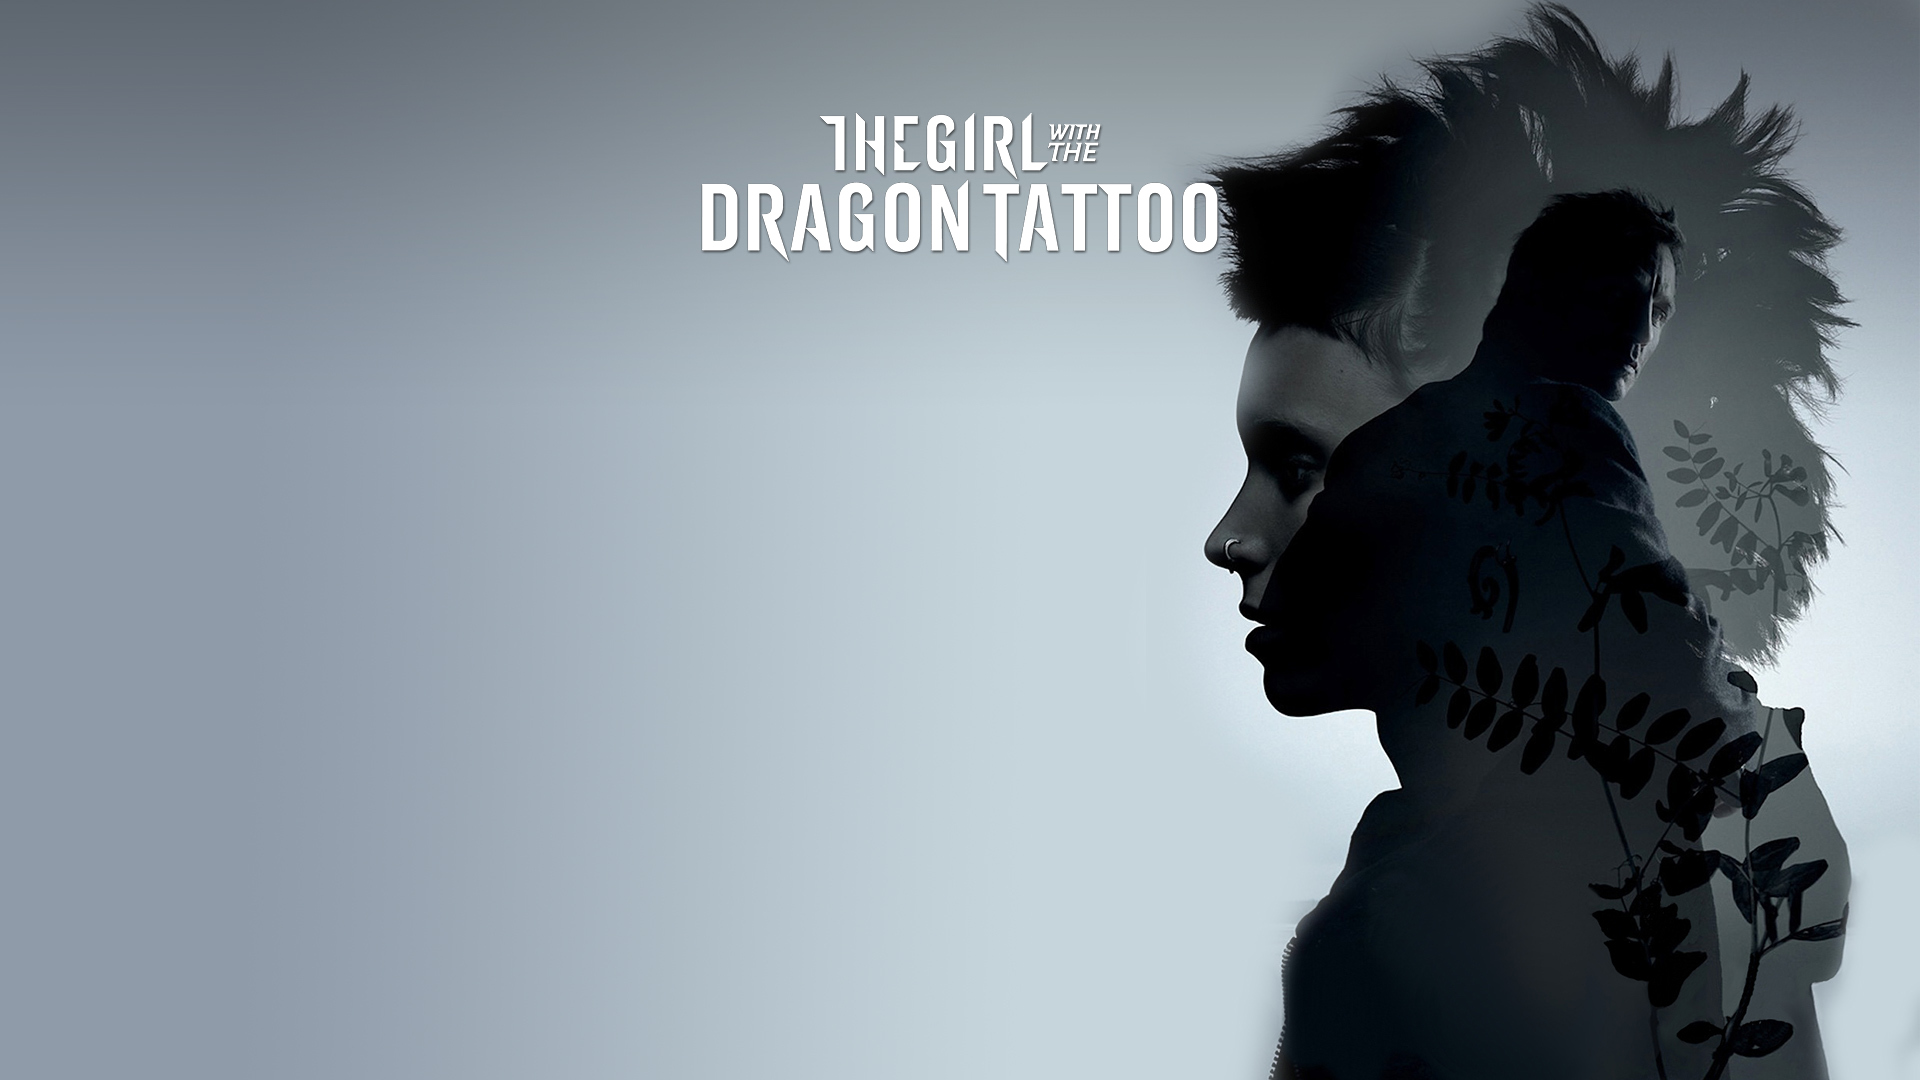 People 1920x1080 The Girl with the Dragon Tattoo Daniel Craig Rooney Mara David Fincher movies movie poster women men